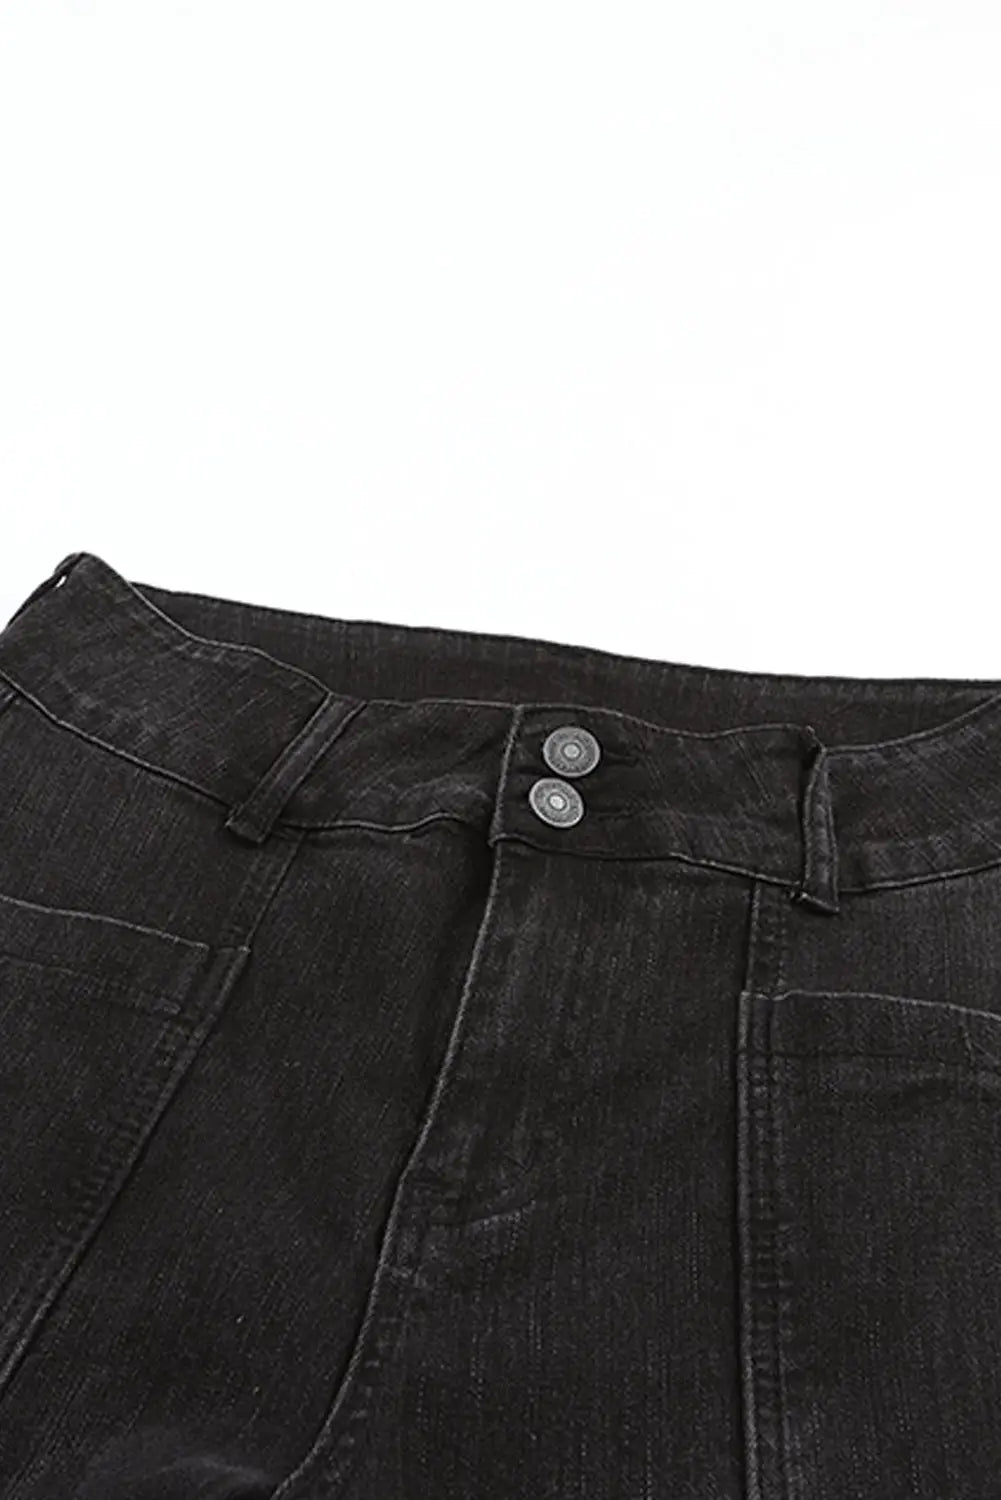 Black exposed seam split flare jeans